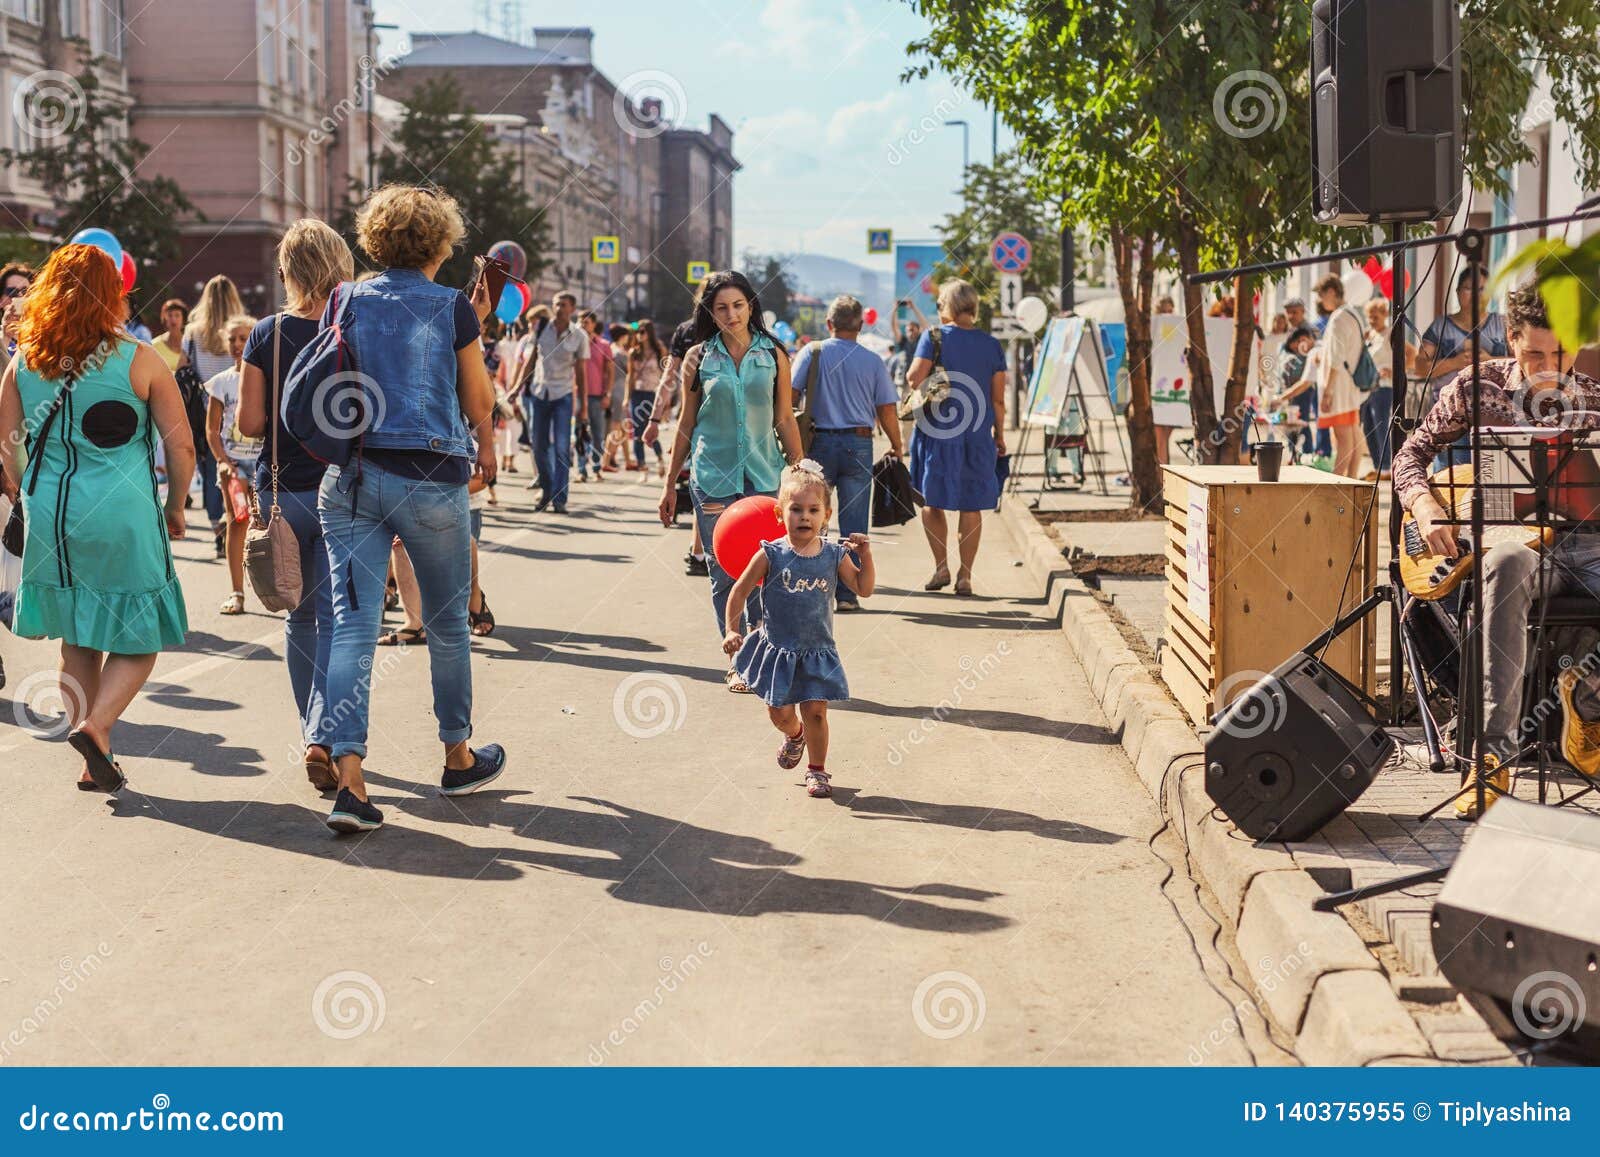 RUSSIA, Krasnoyarsk - August 25: a Little Girl with a Red Balloon Runs